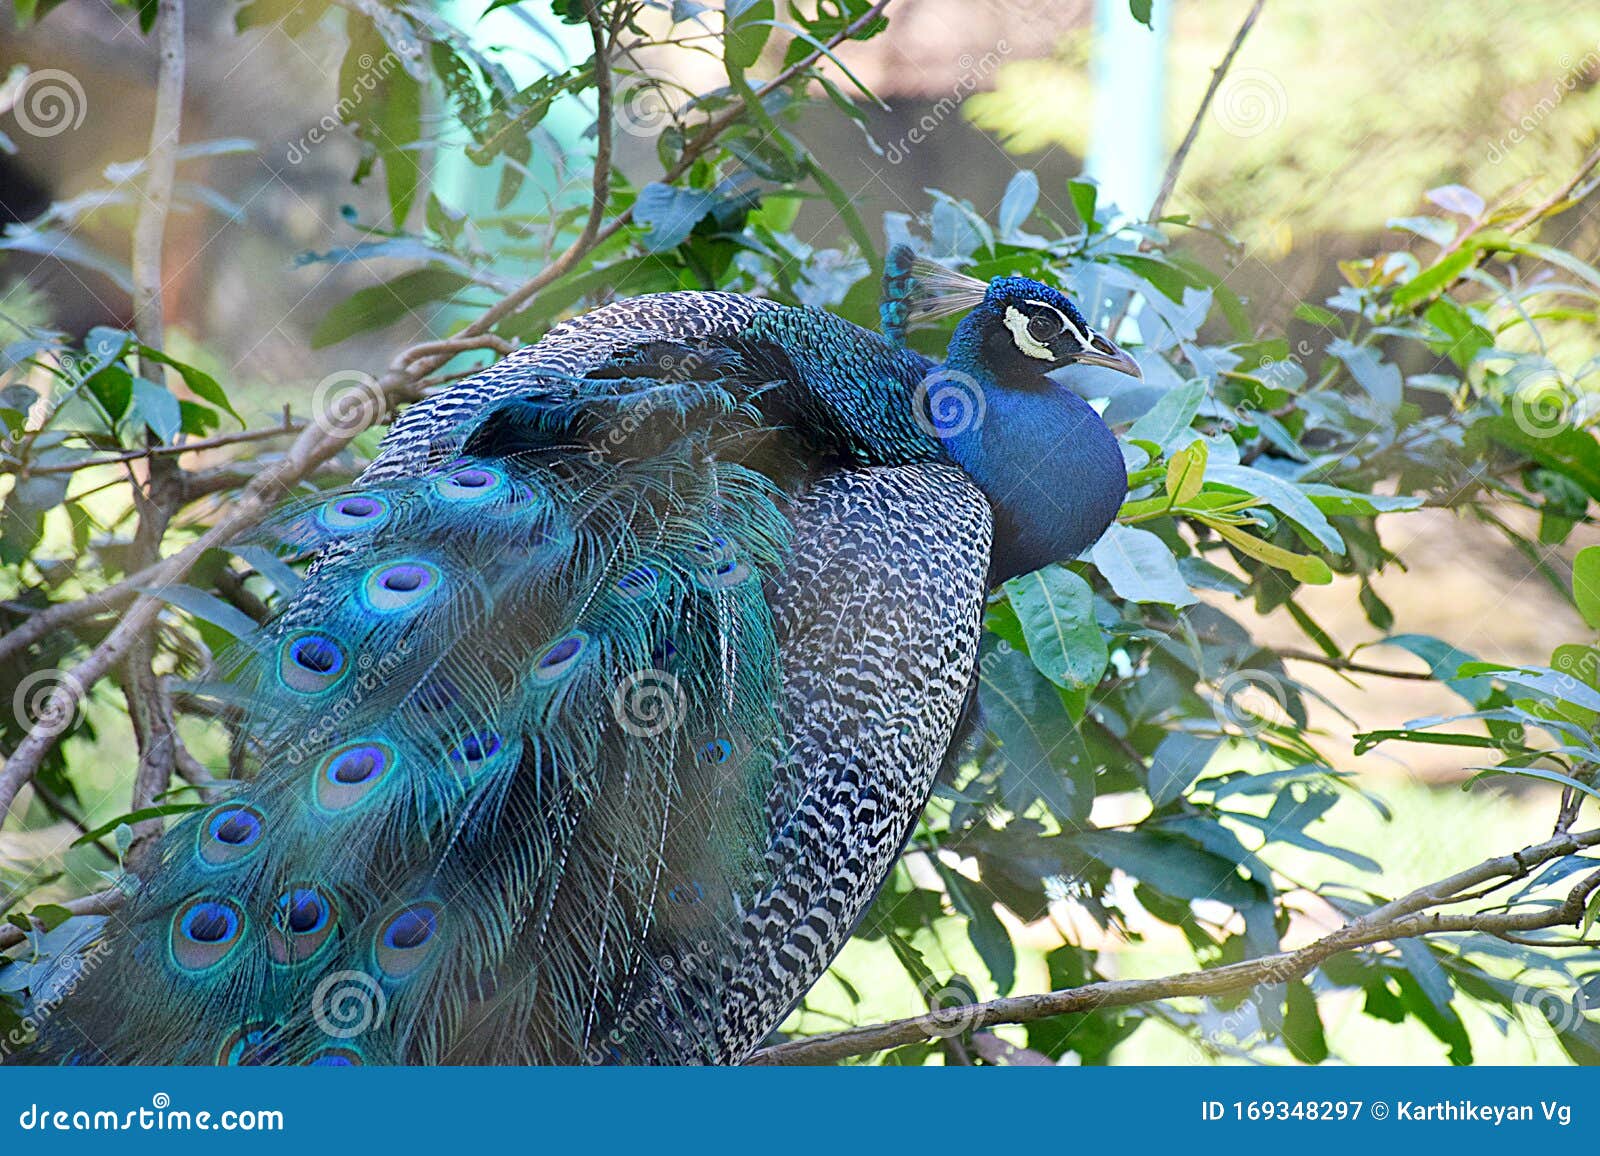 Peacock Blues - Kerala Zoo - Birds and Animals Stock Image - Image of gods,  glittering: 169348297